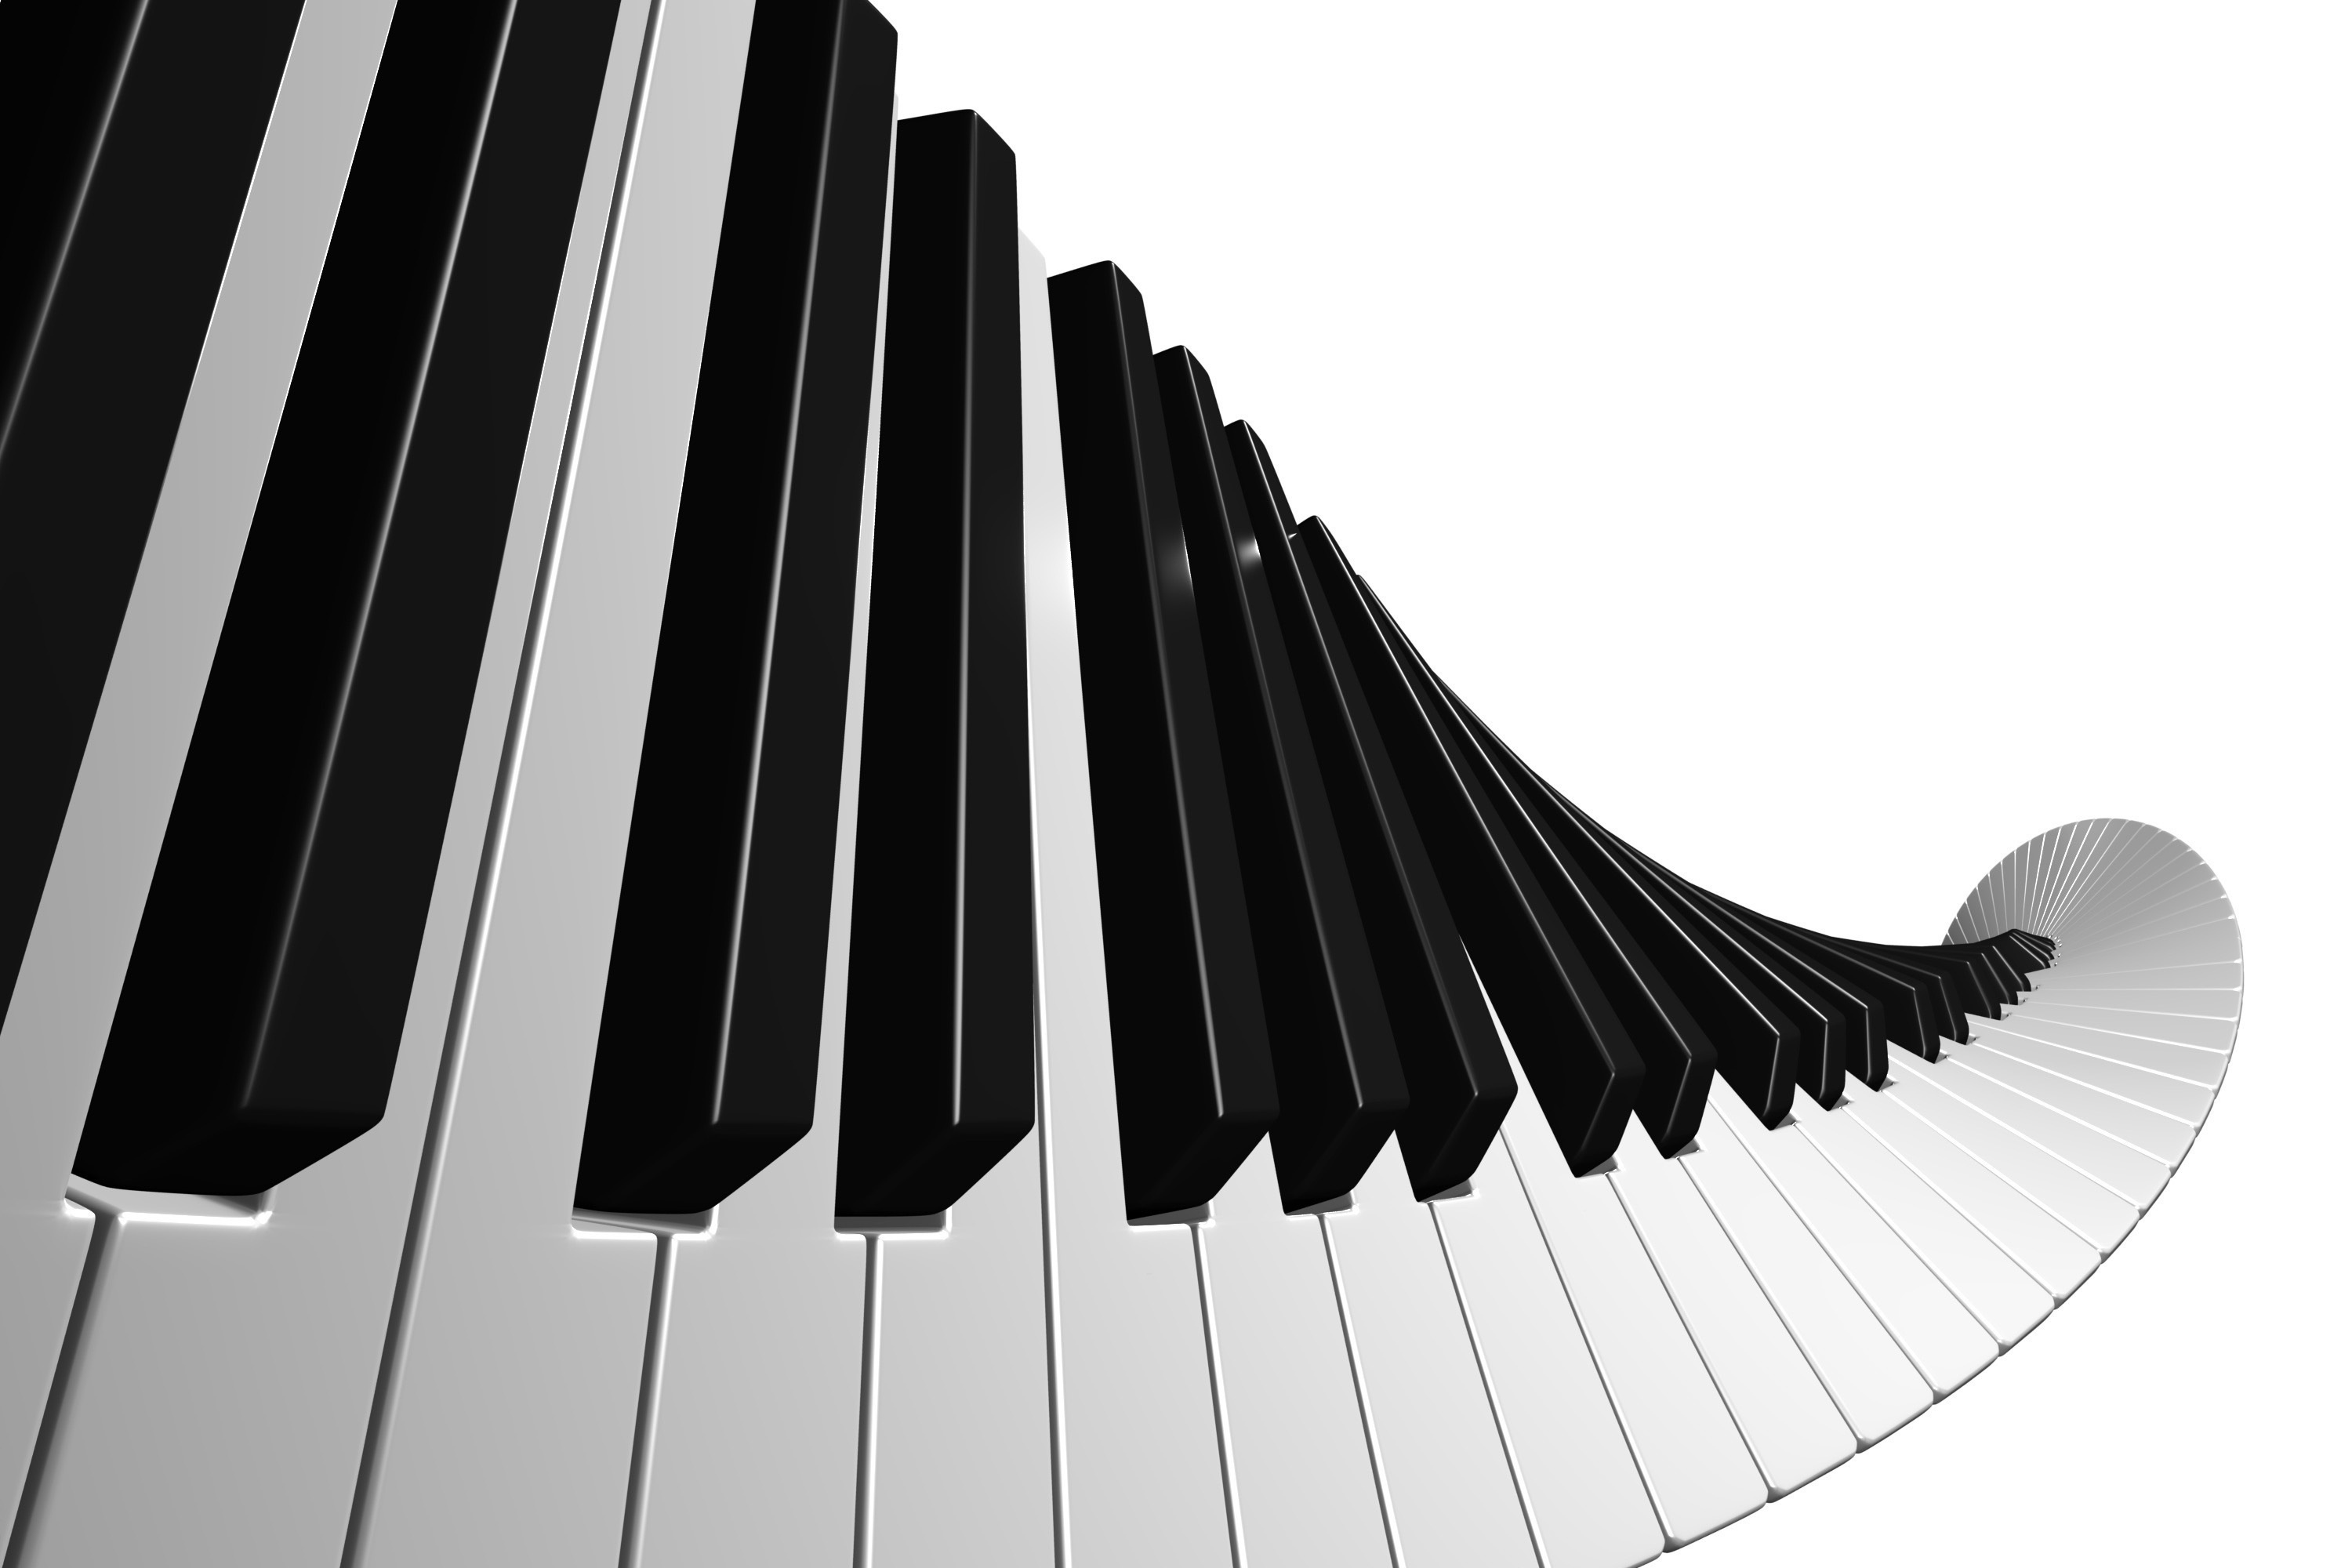 Piano Keys images  pictures - NearPics